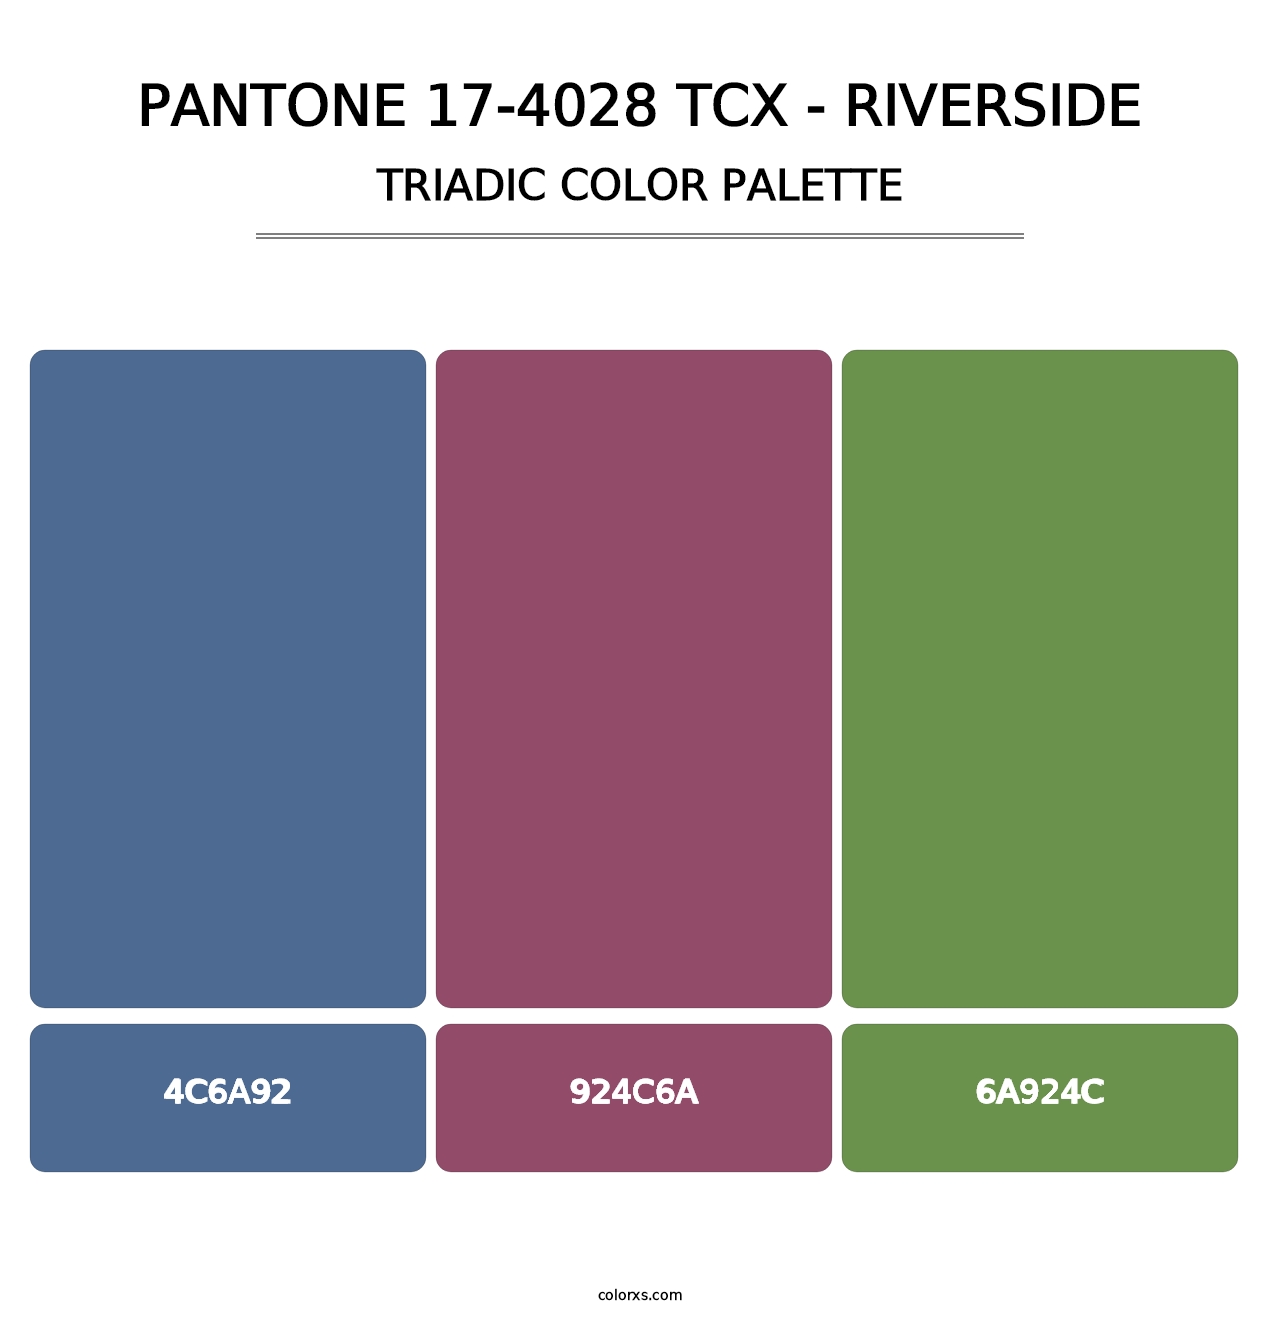 PANTONE 17-4028 TCX - Riverside - Triadic Color Palette